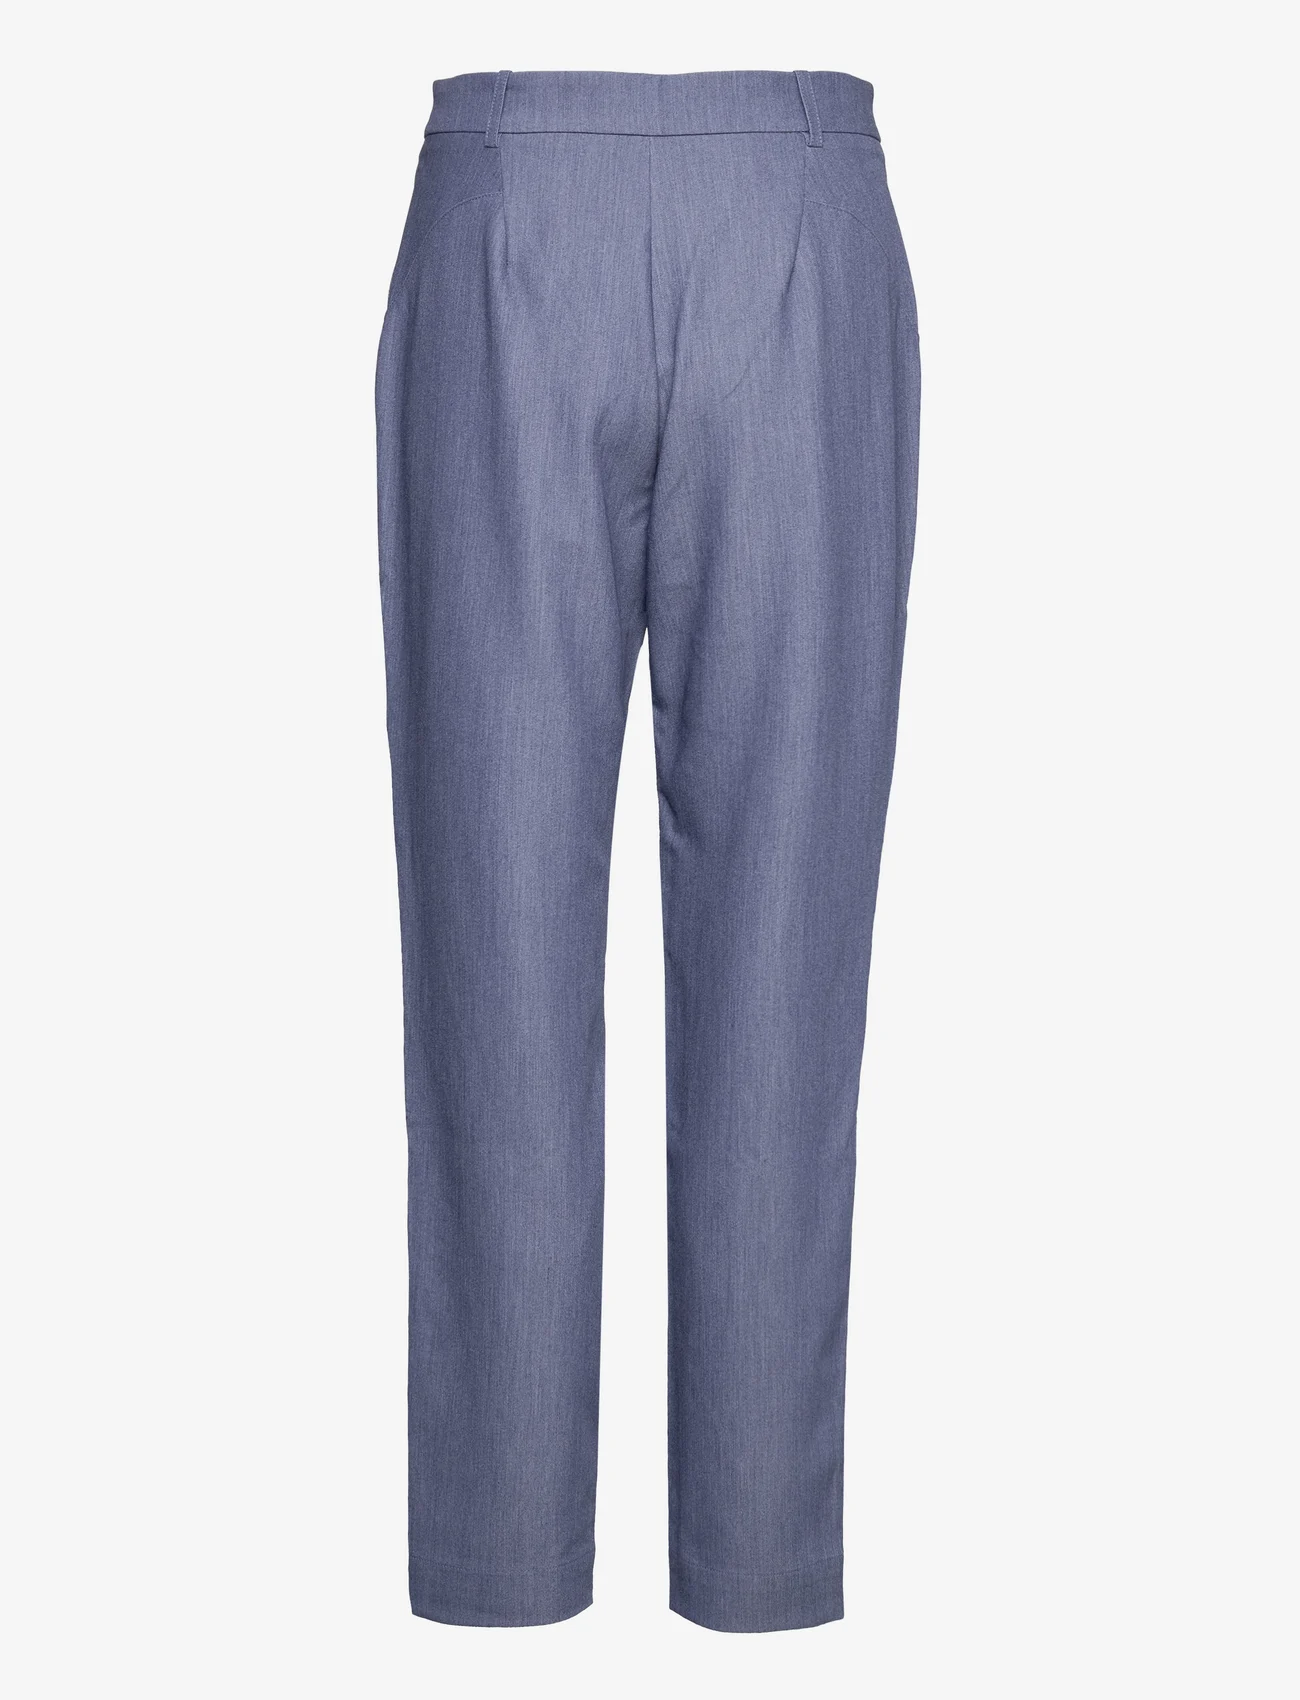 Coster Copenhagen - Pants with regular legs - Stella fi - tiesaus kirpimo kelnės - medium denim blue - 1